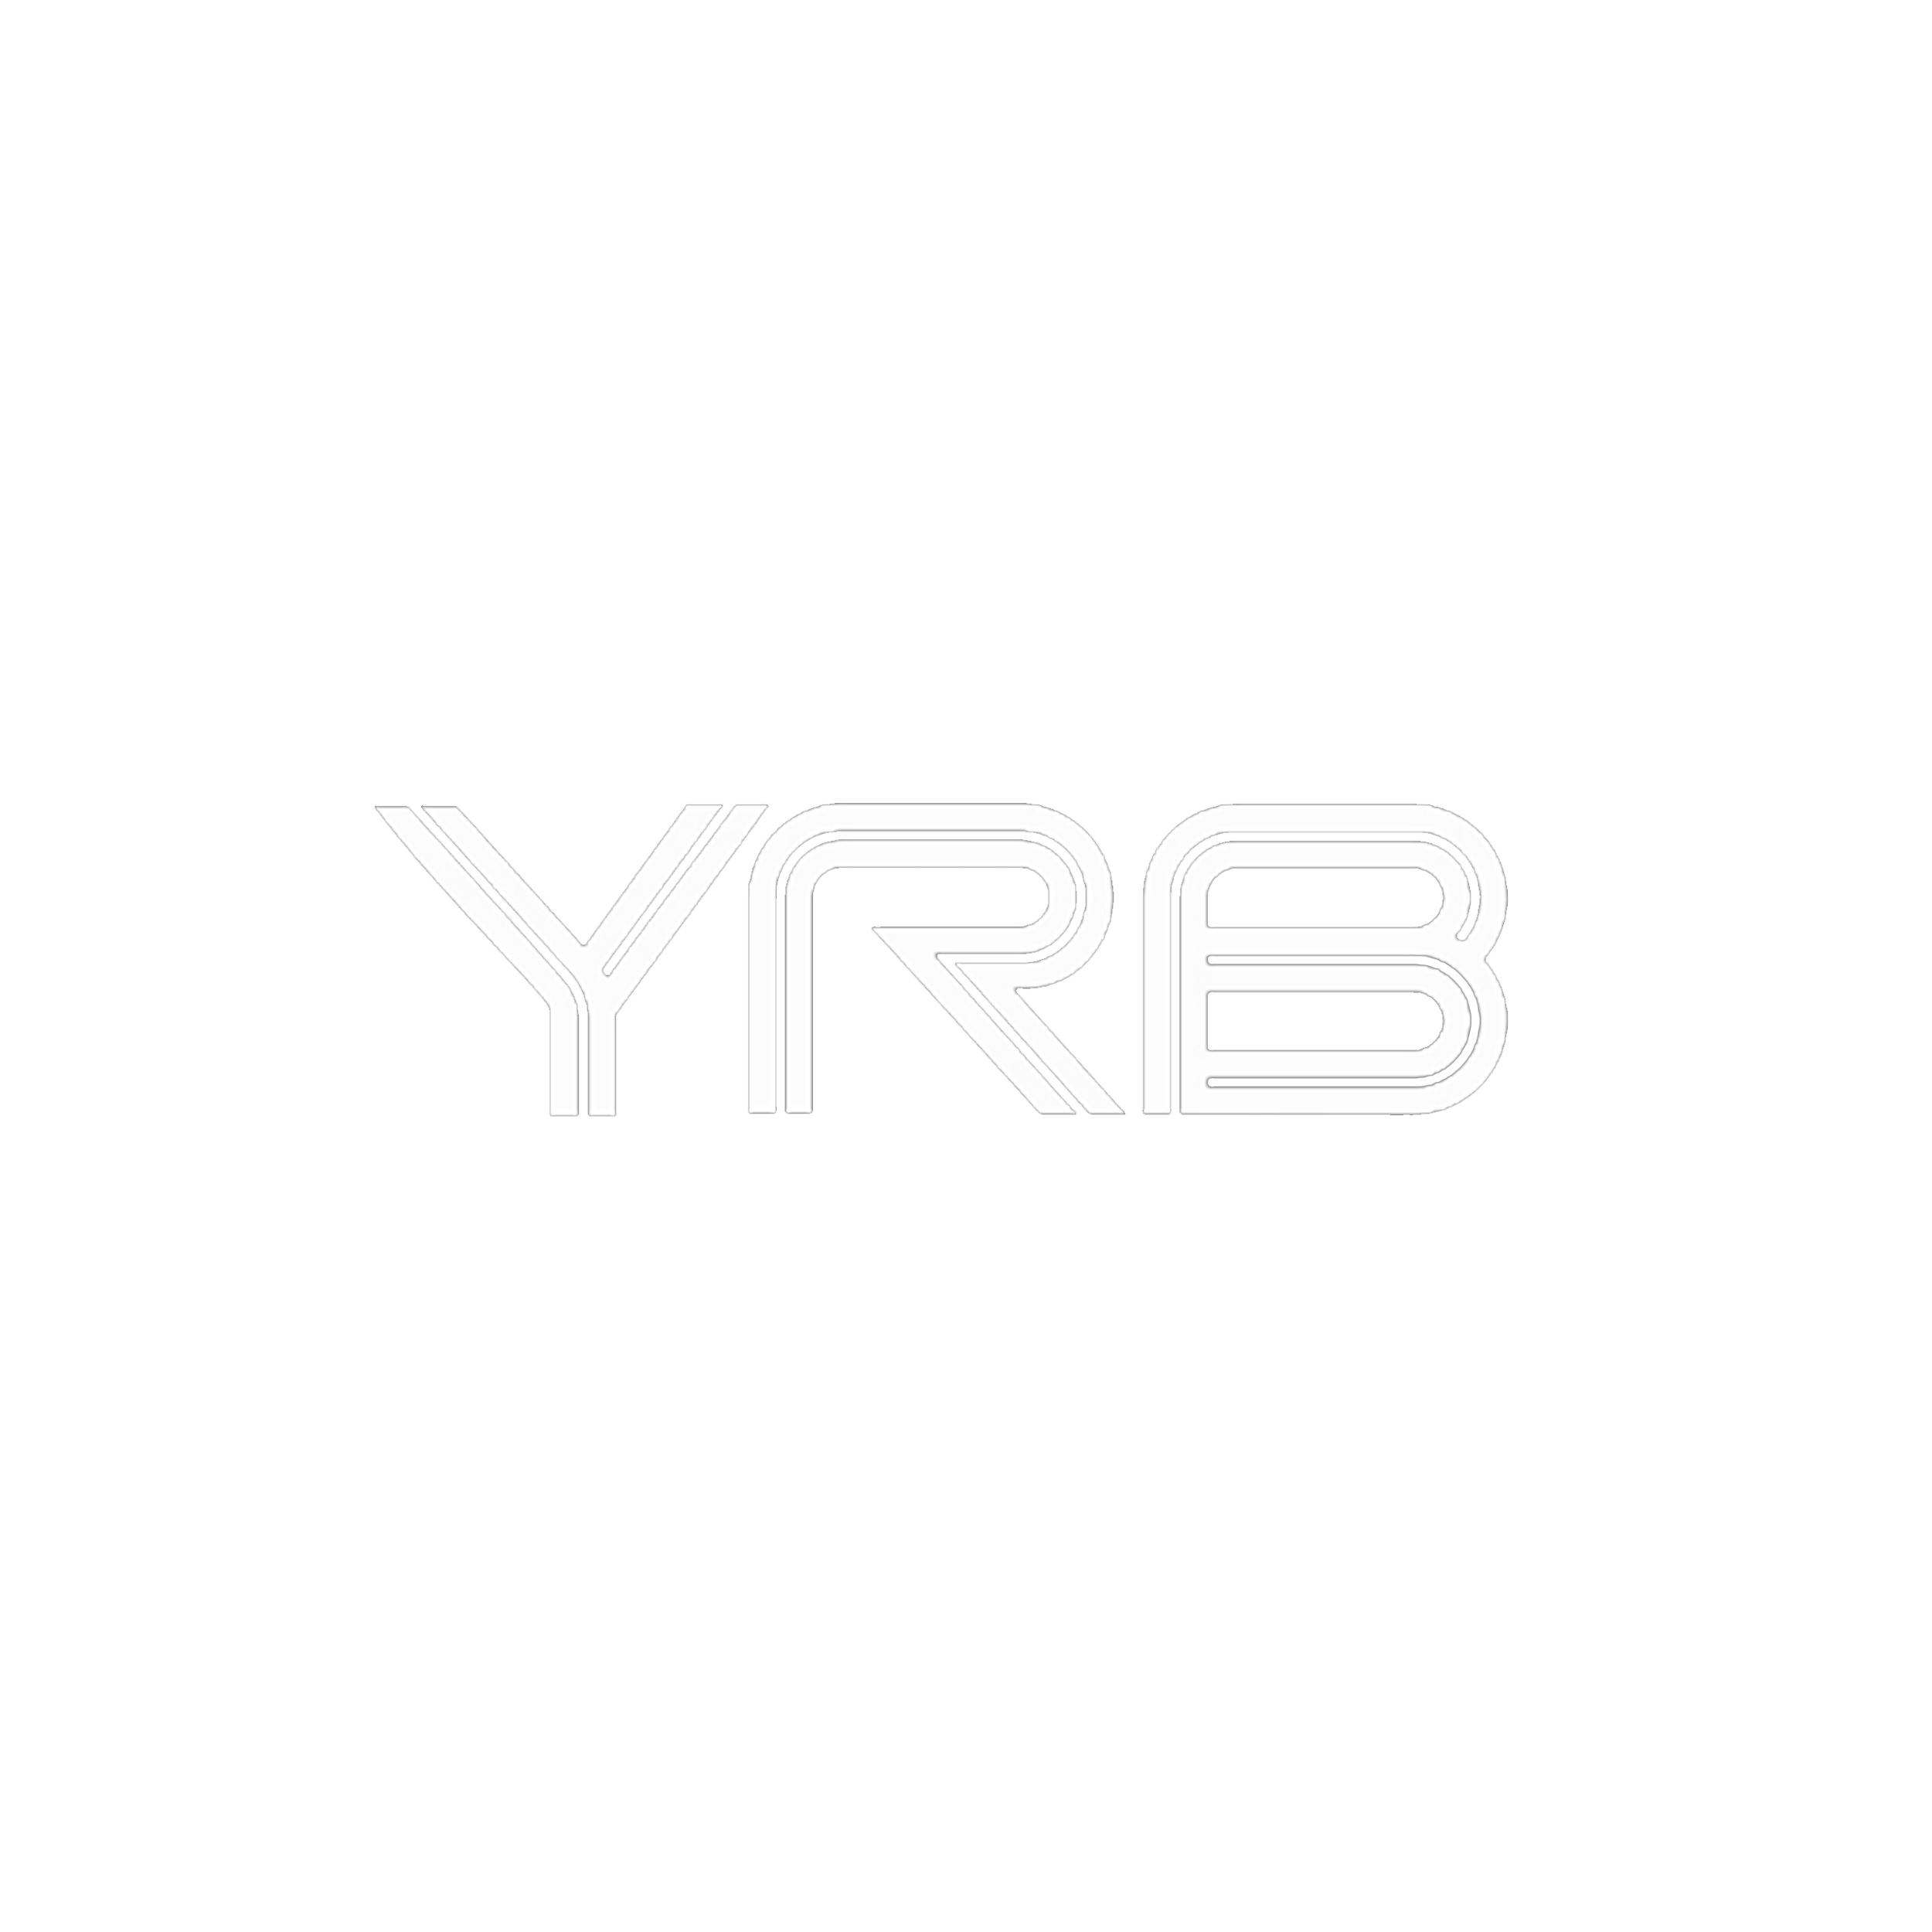 YRB Magazine